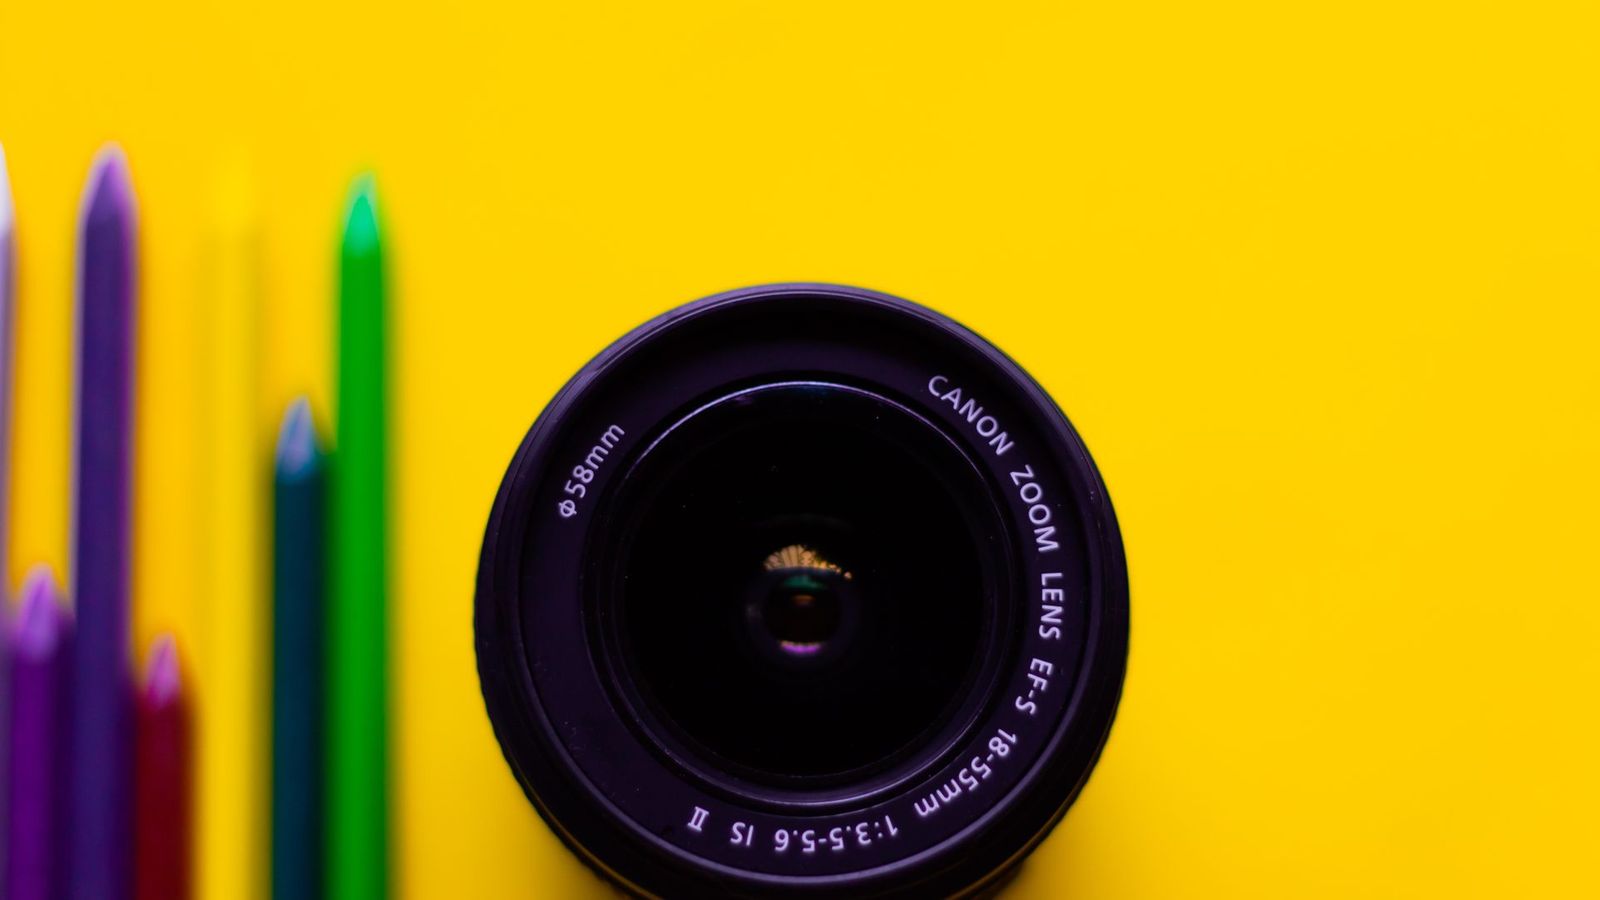 Black Canon Zoom Lens - Camera Lens - HD Wallpaper 